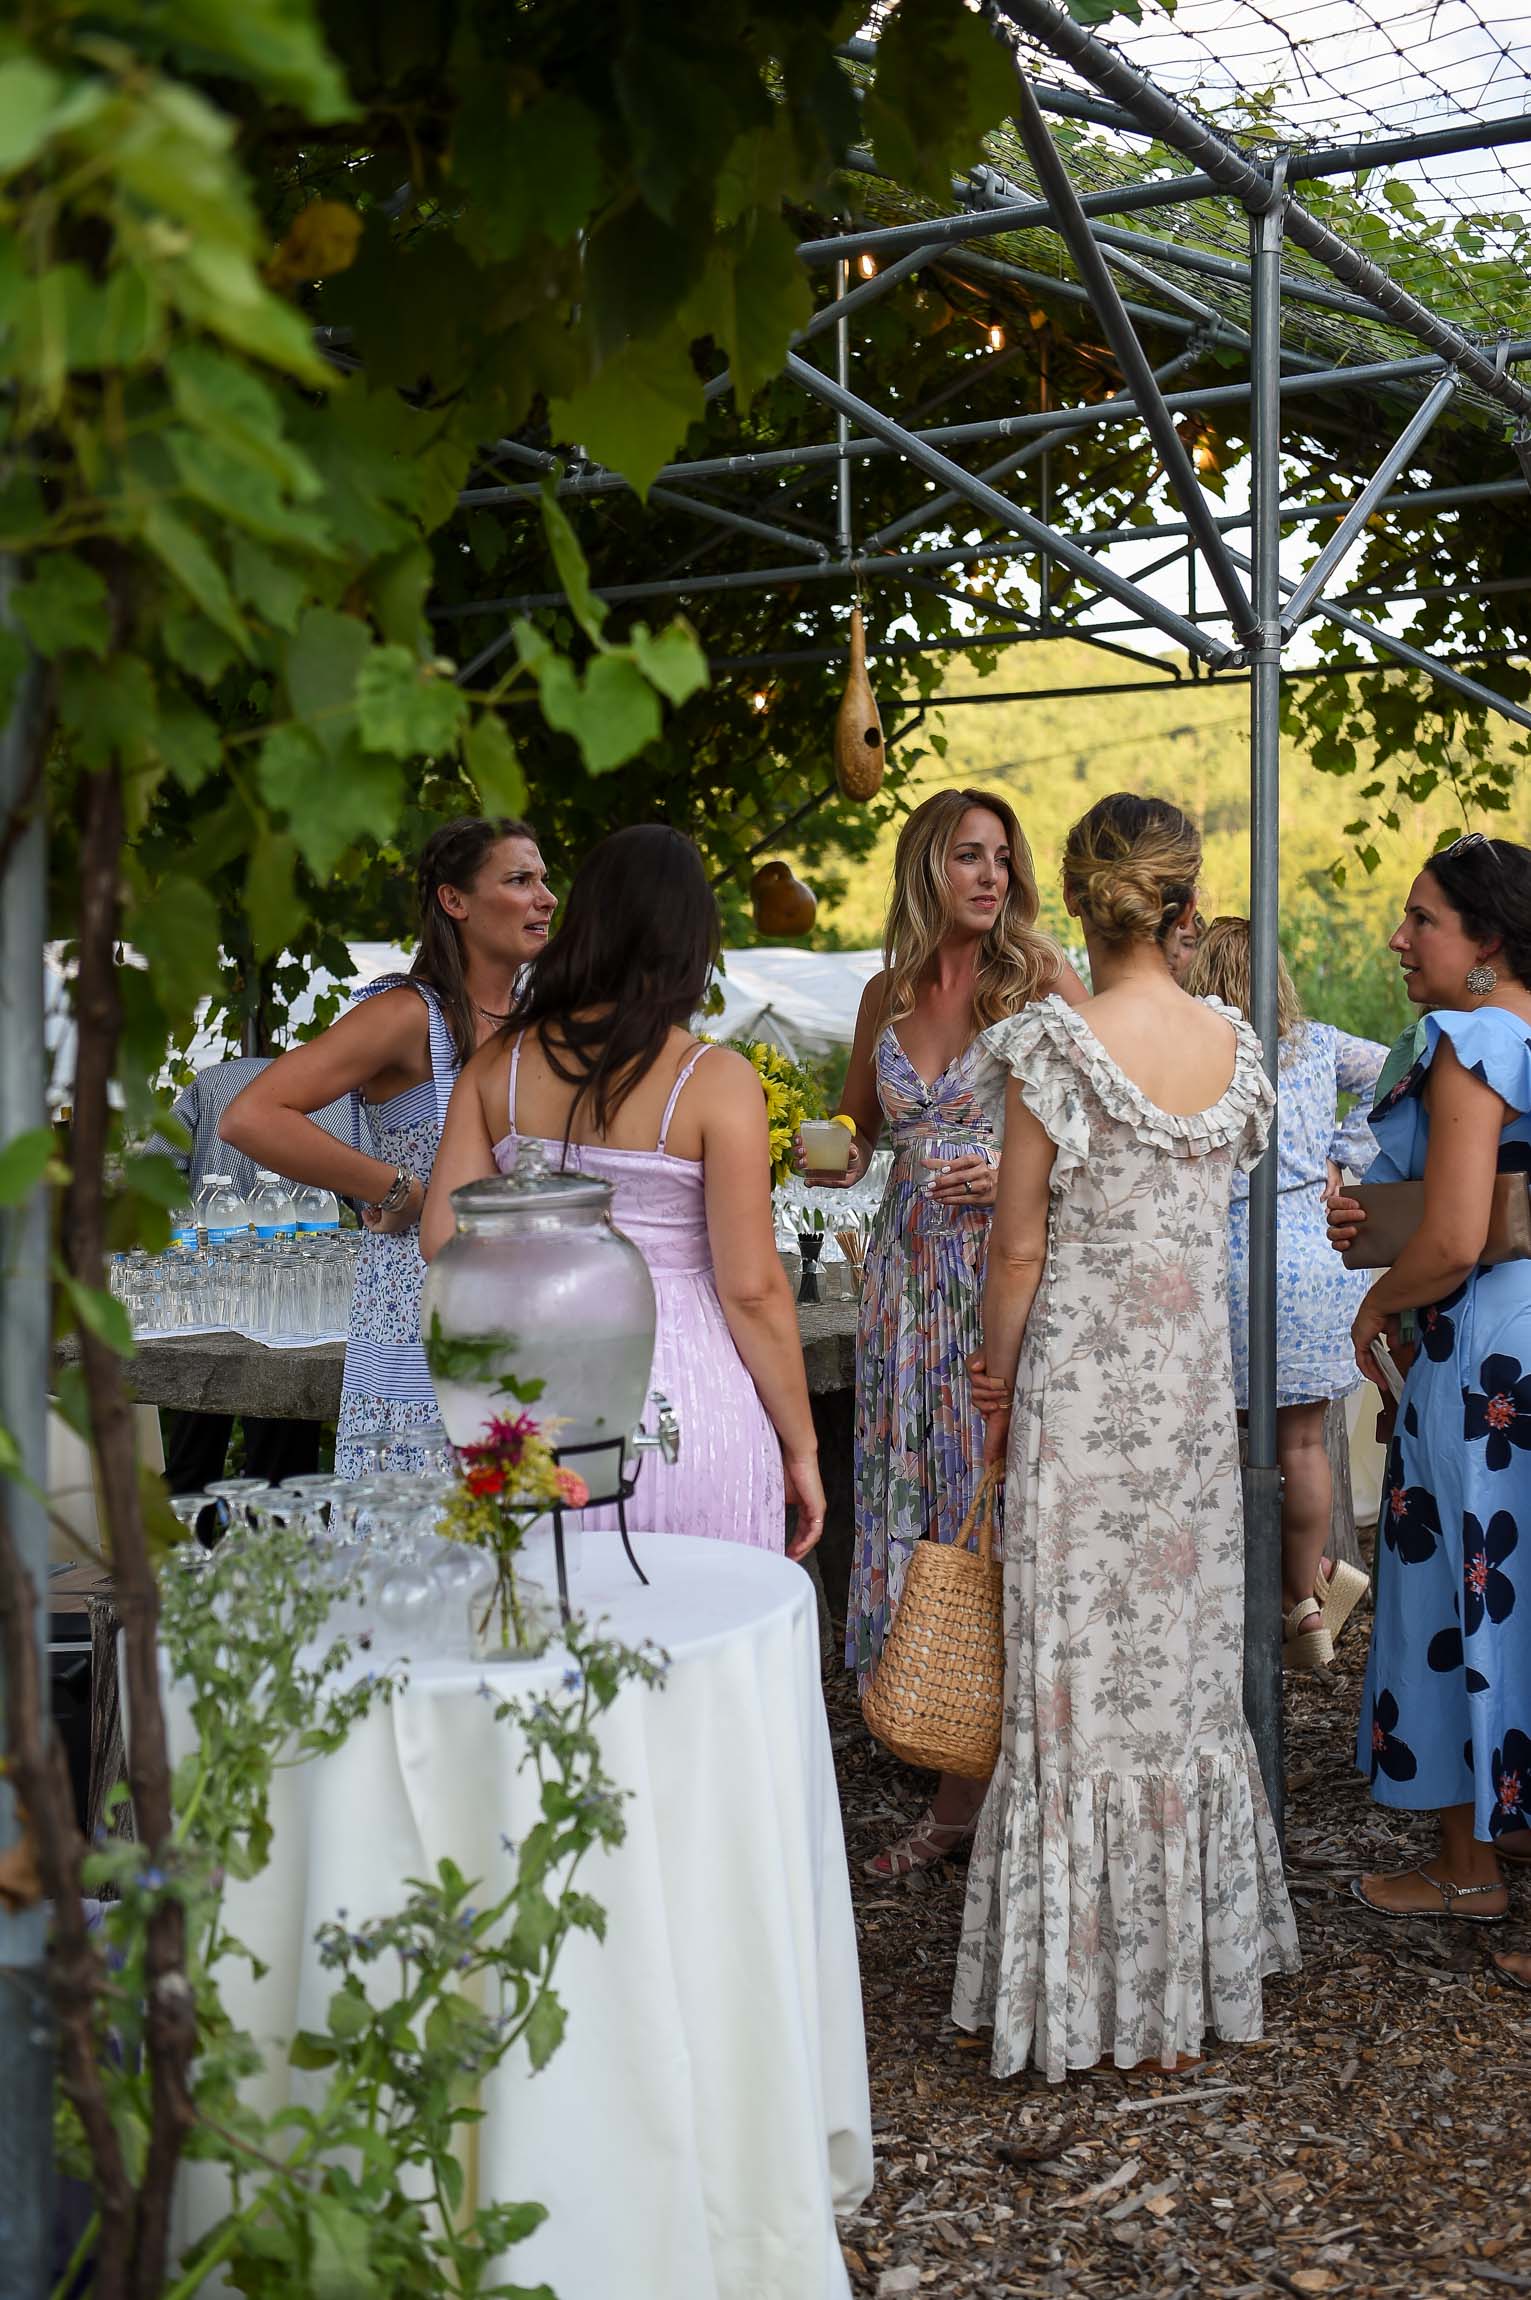 Women in floral dresses garden party